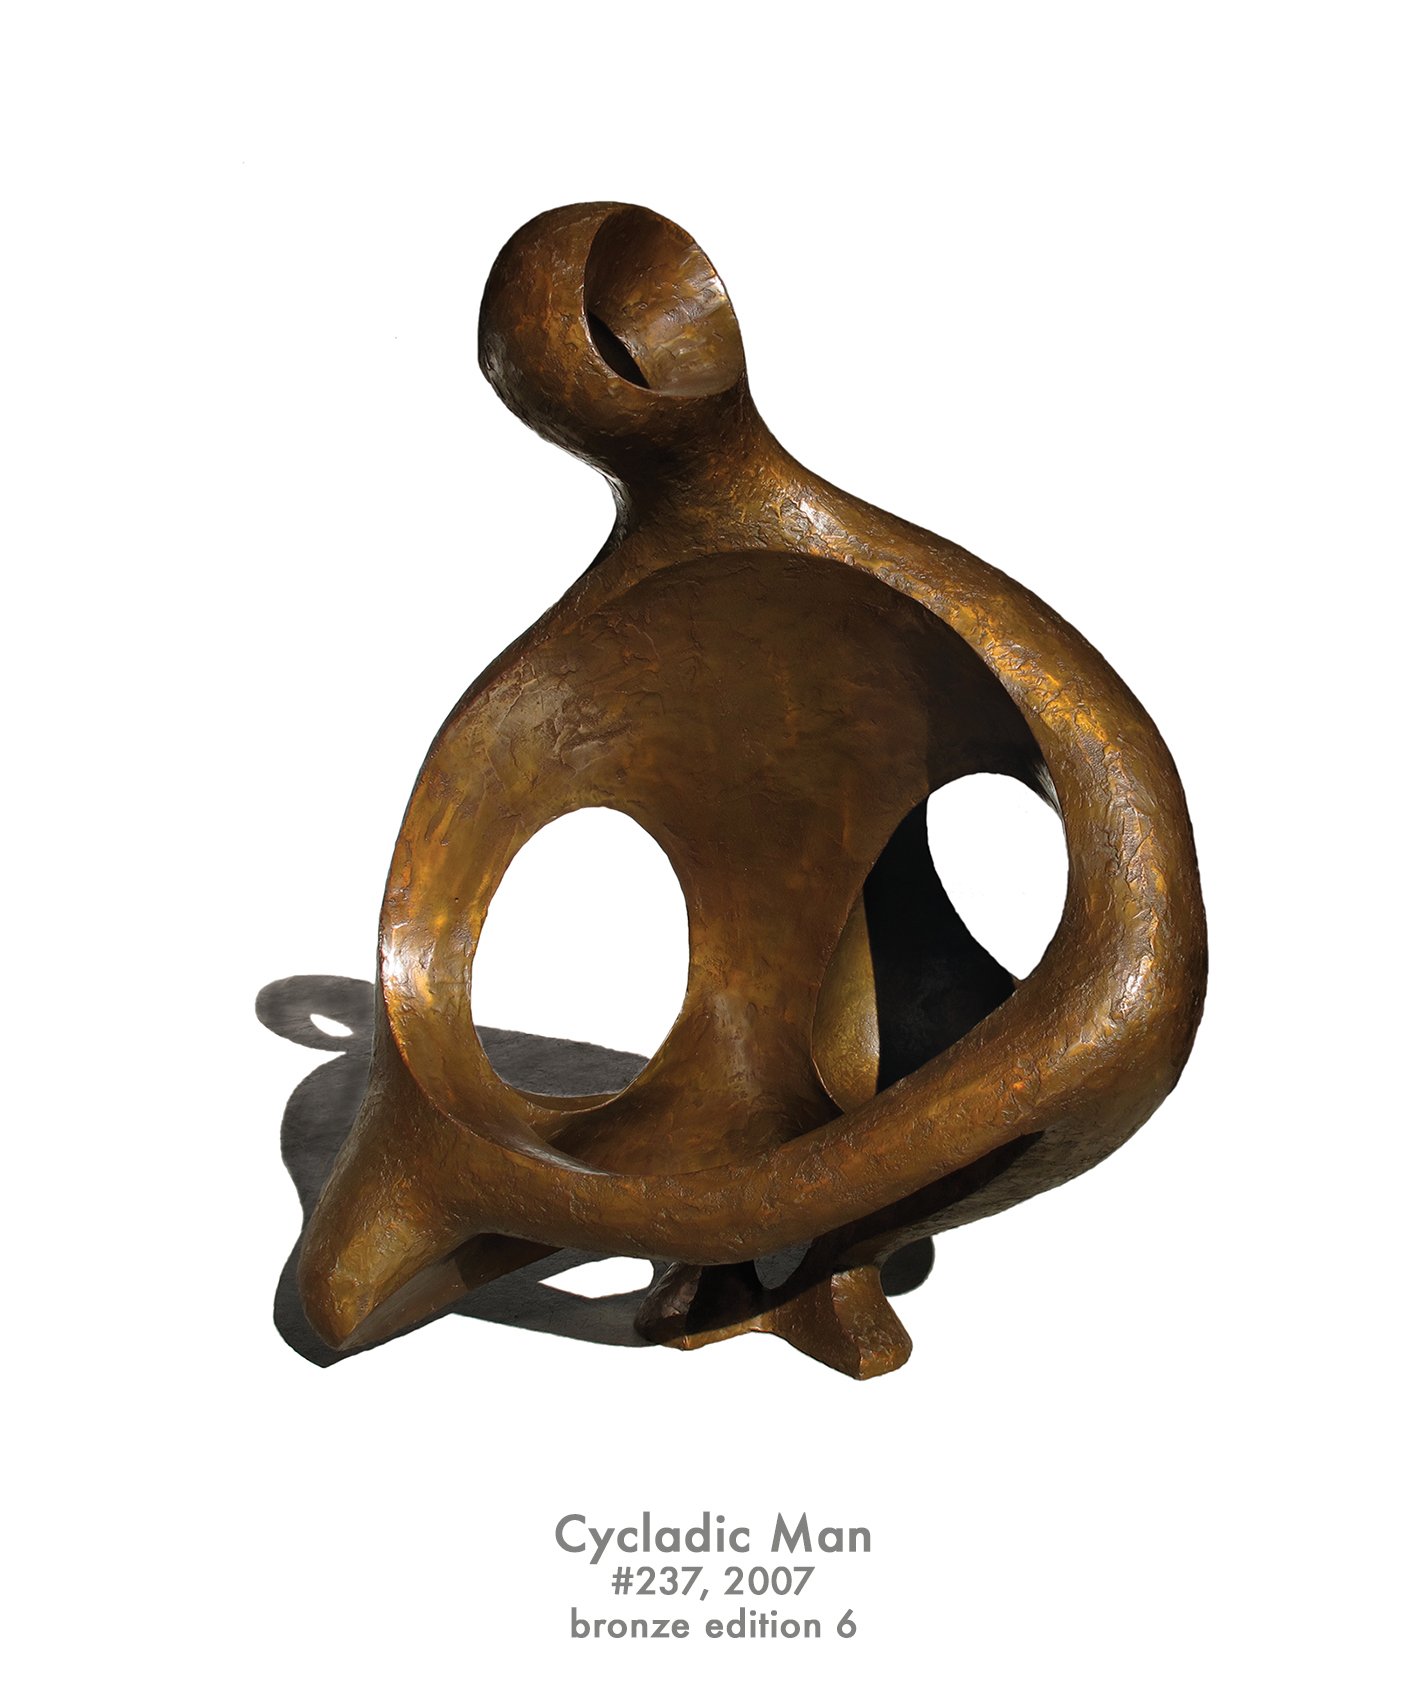 Cycladic Man, 2007, bronze, #237